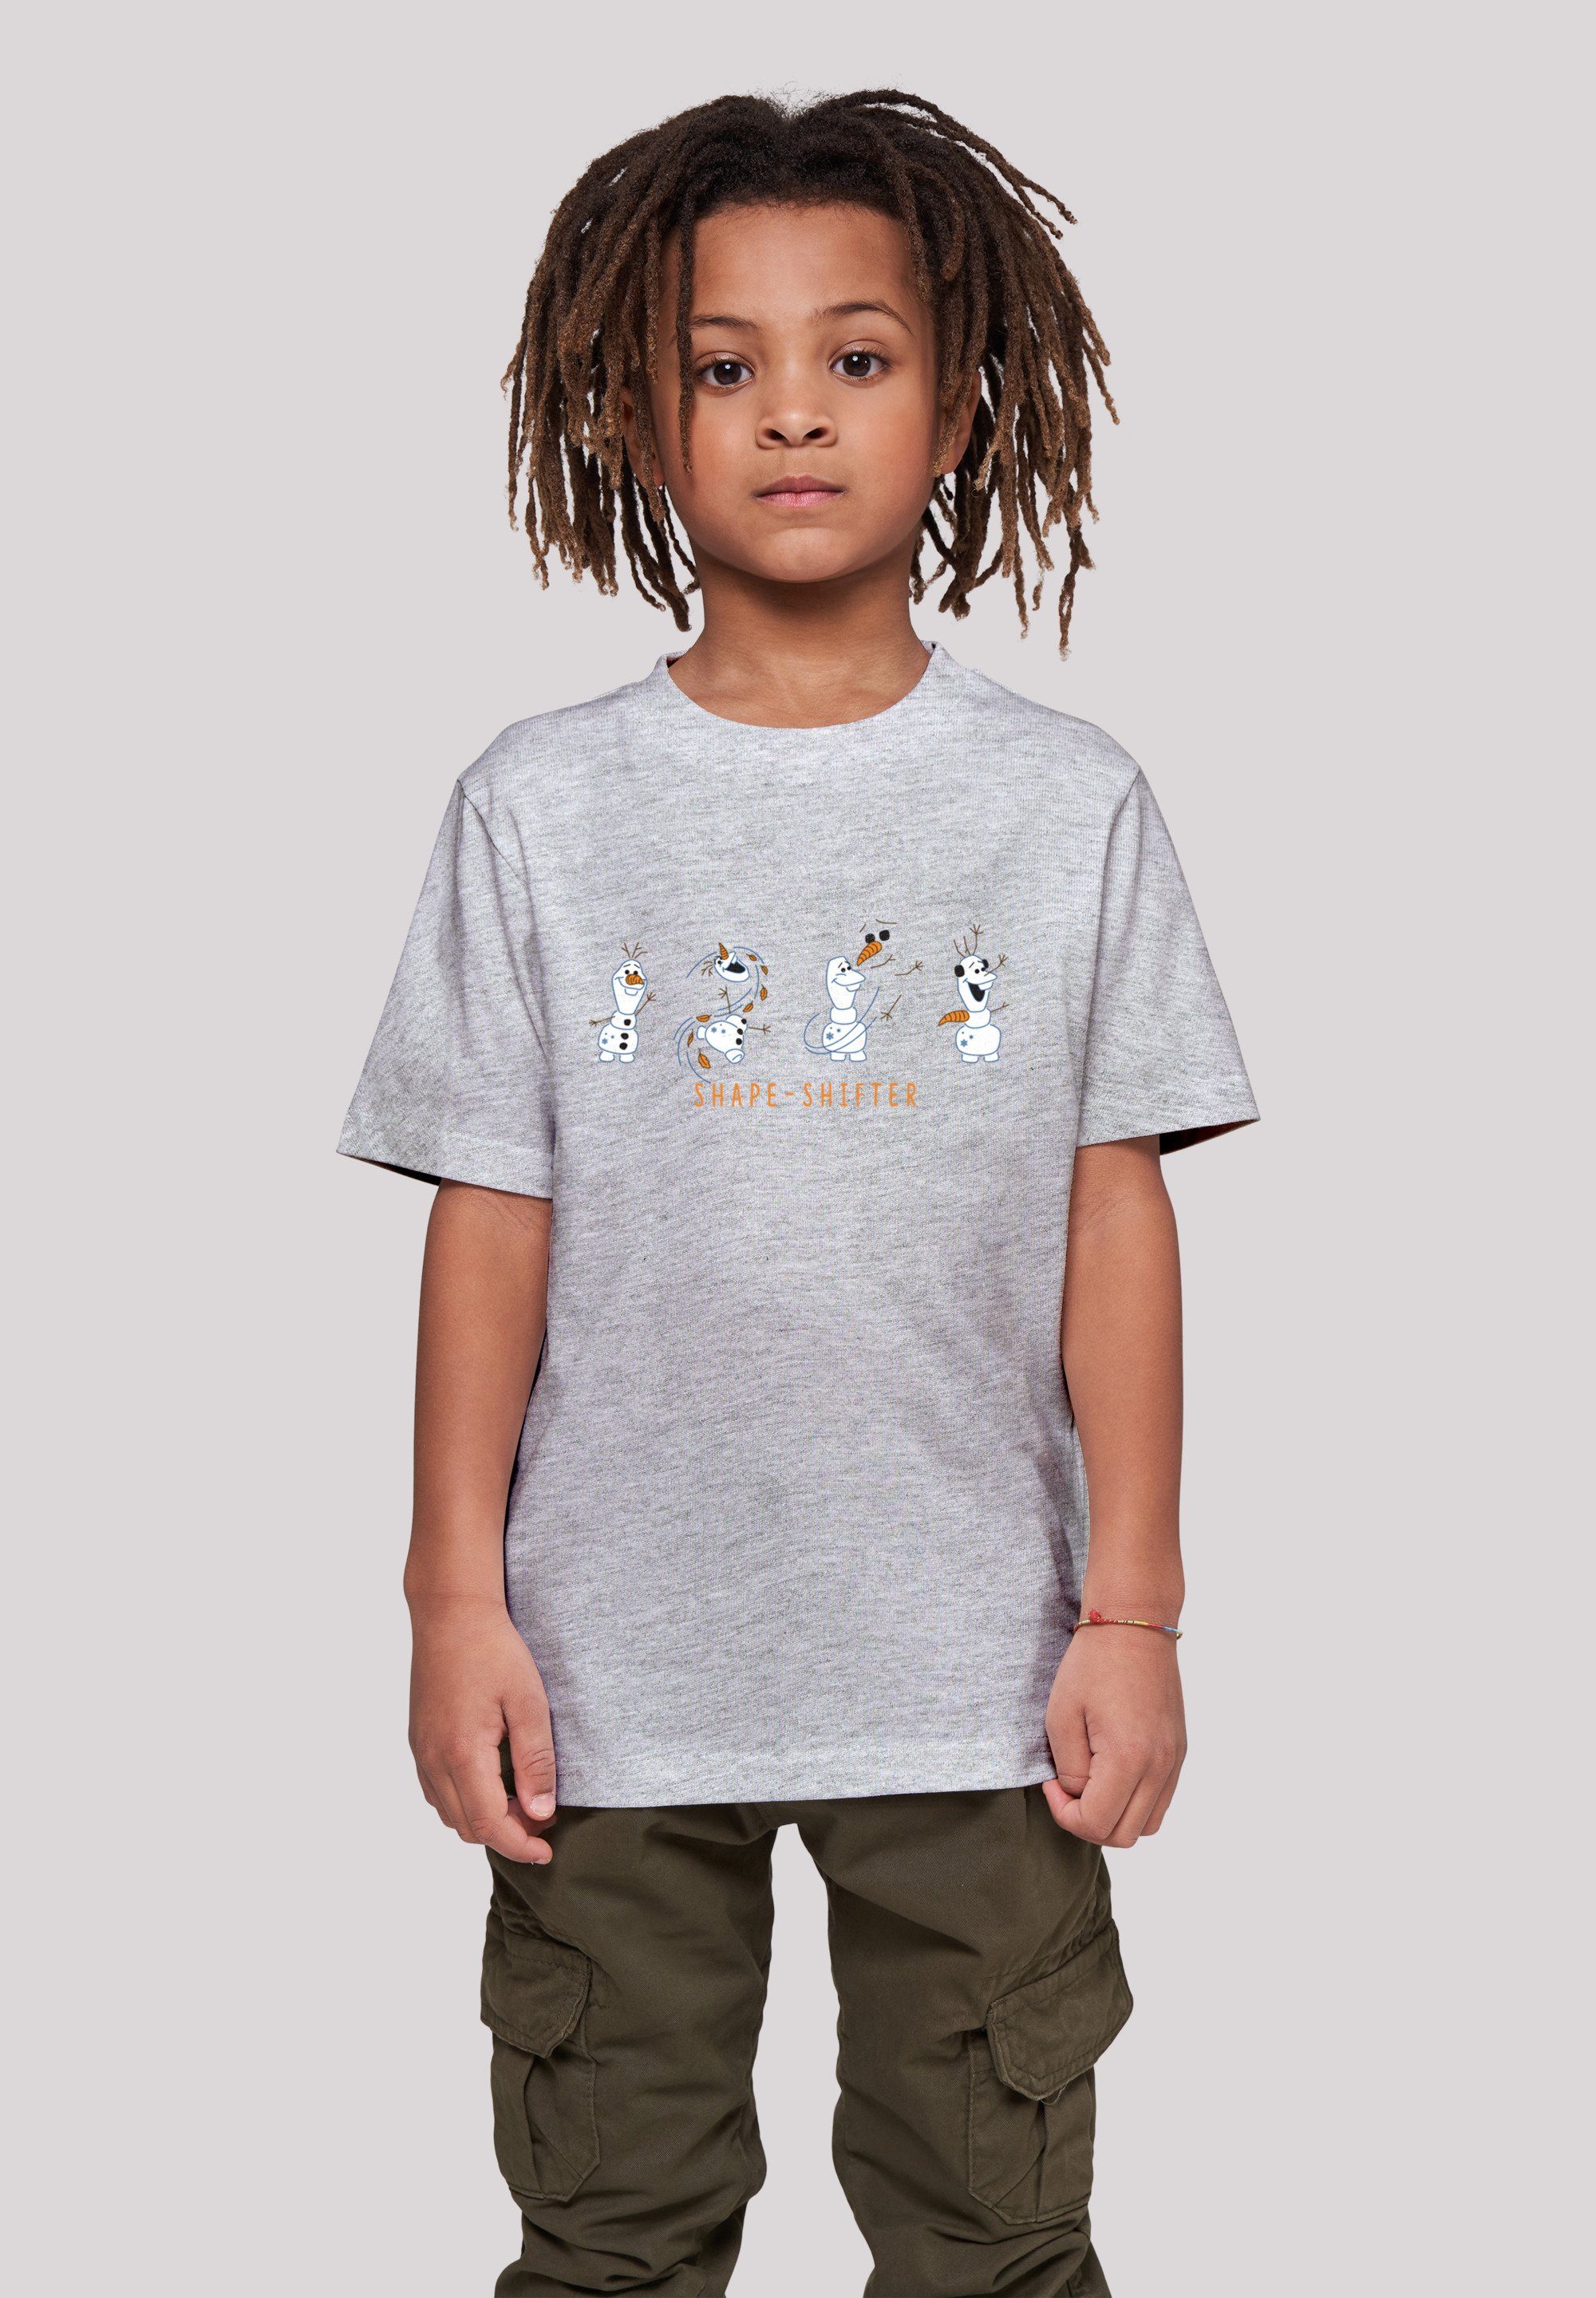 F4NT4STIC T-Shirt Disney Frozen 2 Olaf Shape-Shifter Print heather grey